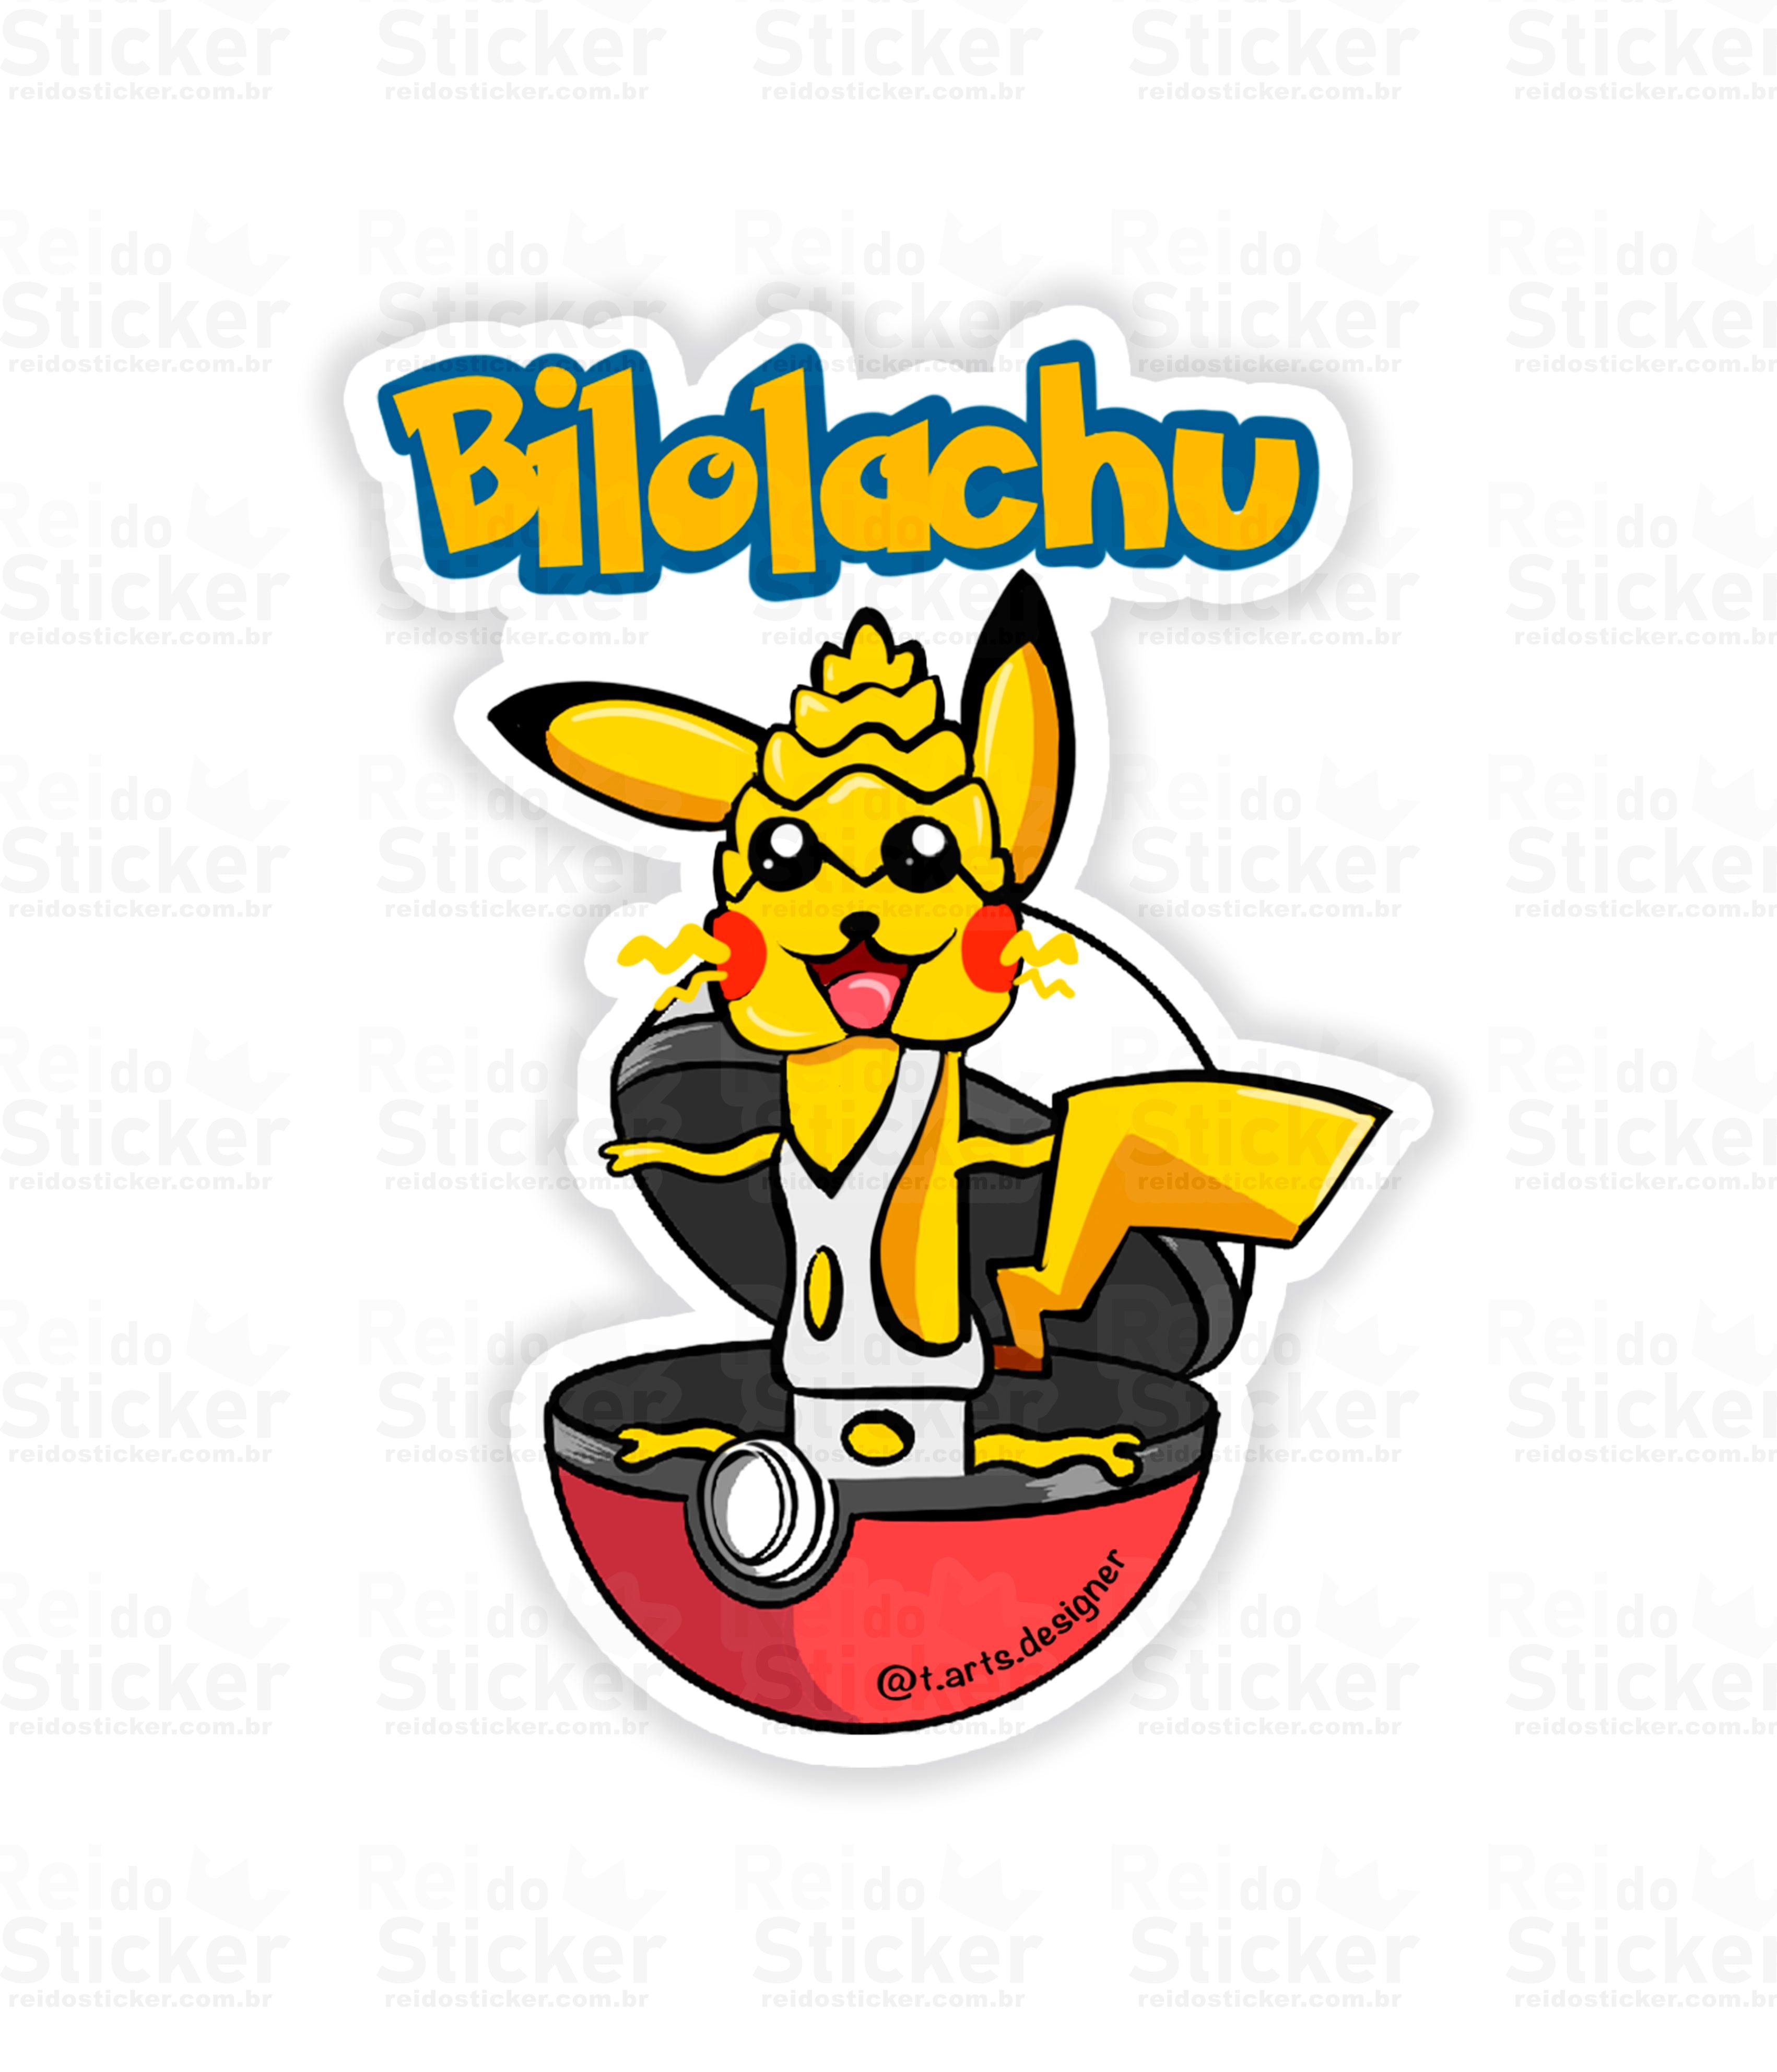 Bilolachu - Rei do Sticker